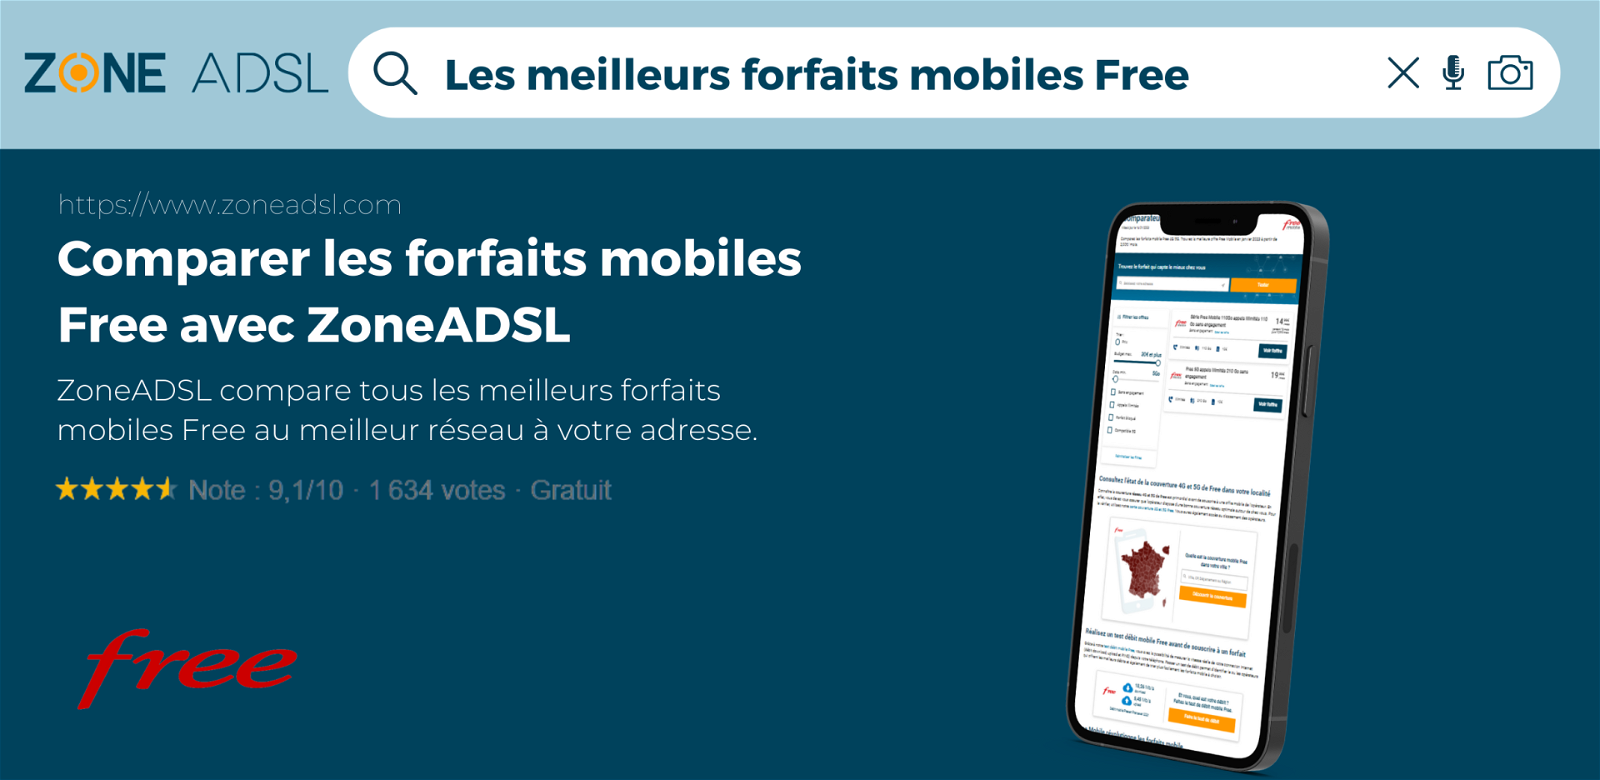 free mobile forfaits choisir